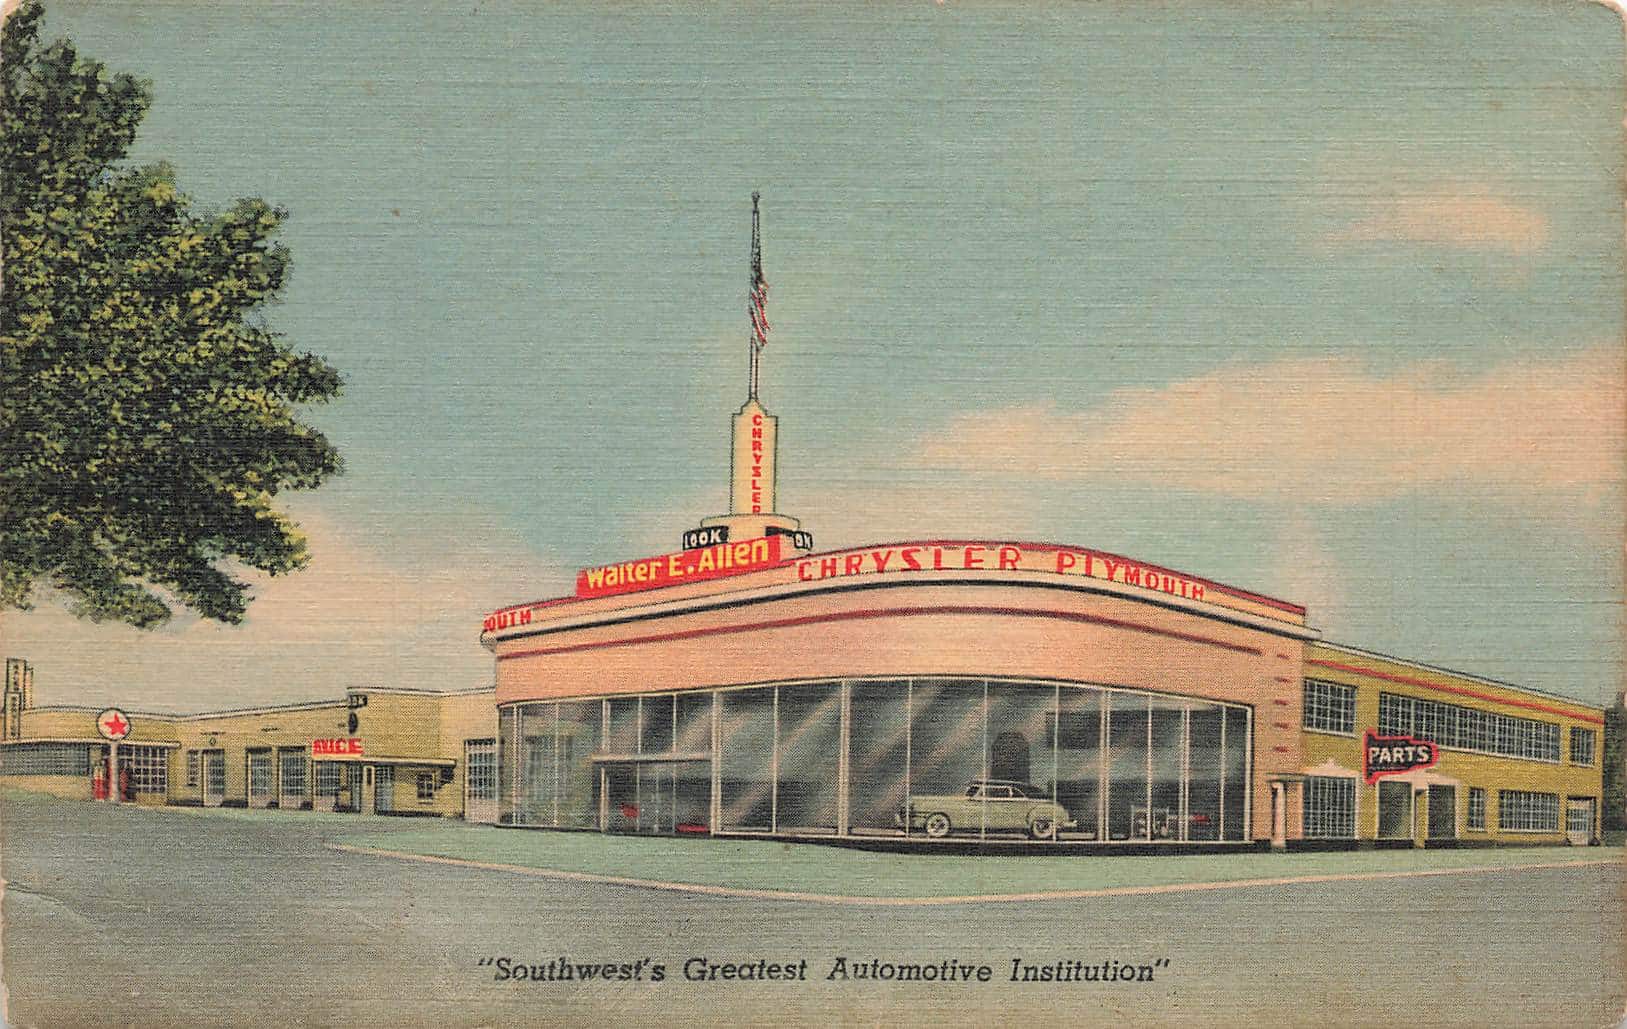 An old postcard featuring the Walter E Allen Chrysler-Plymouth car dealership in Oklahoma City.